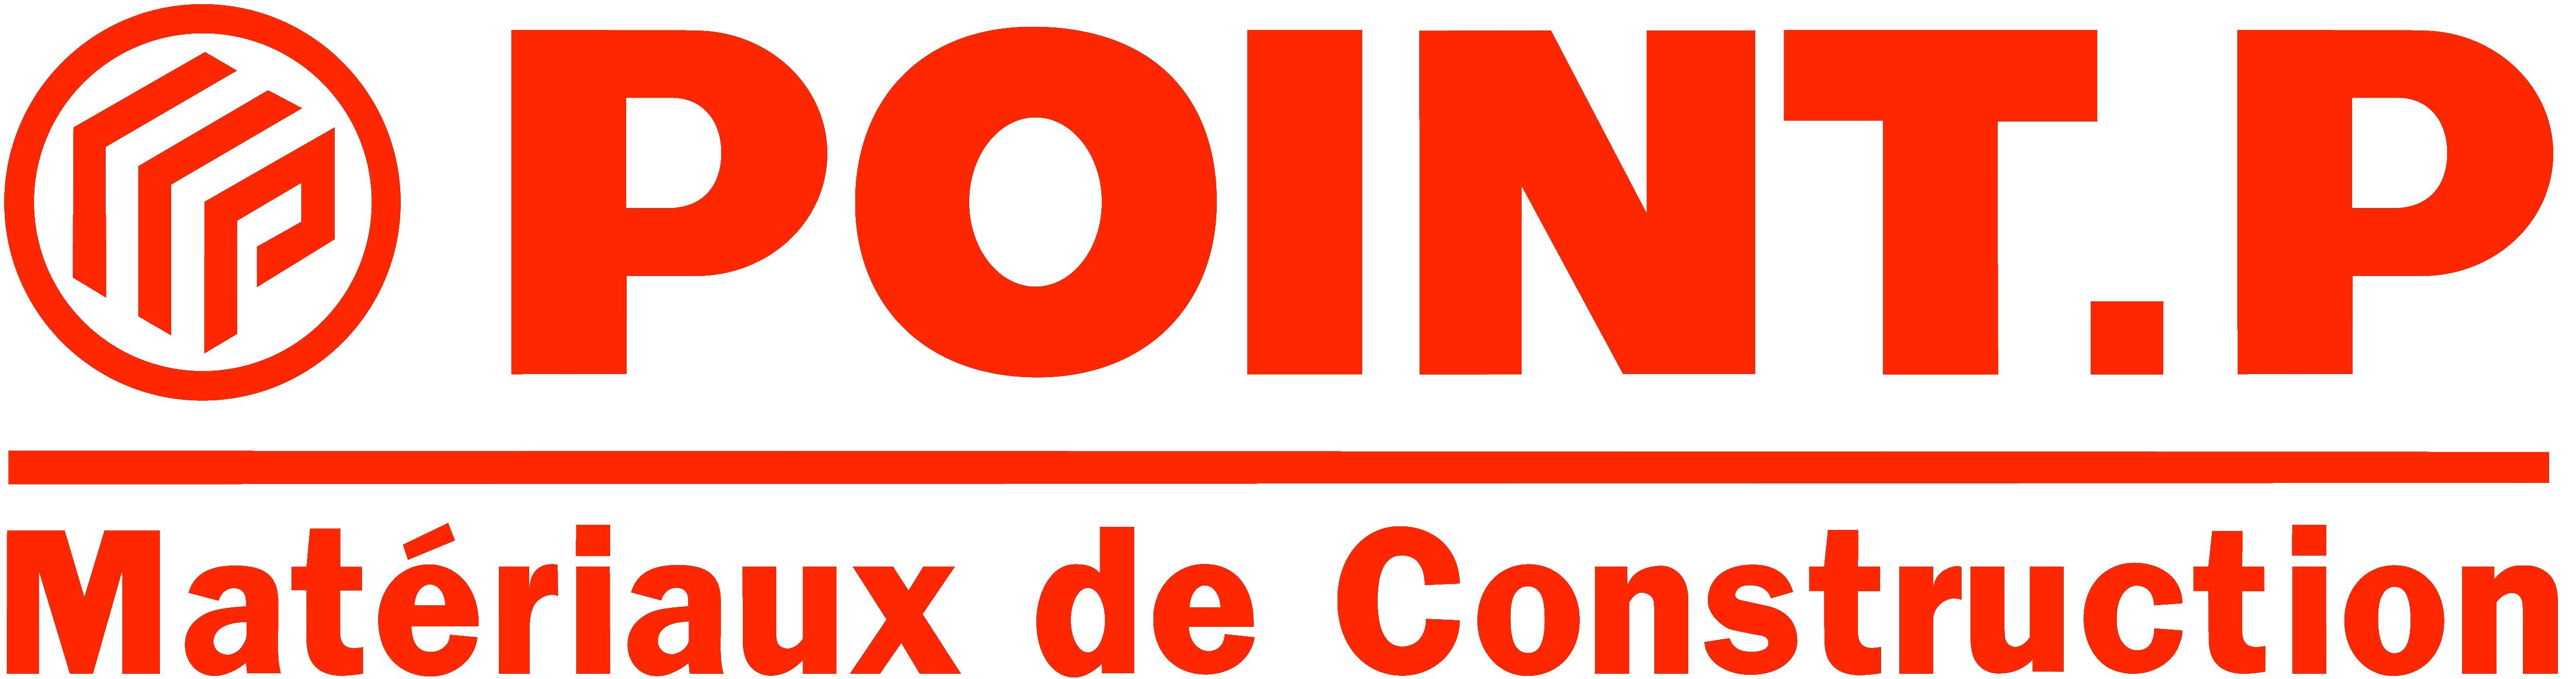 PointP logo